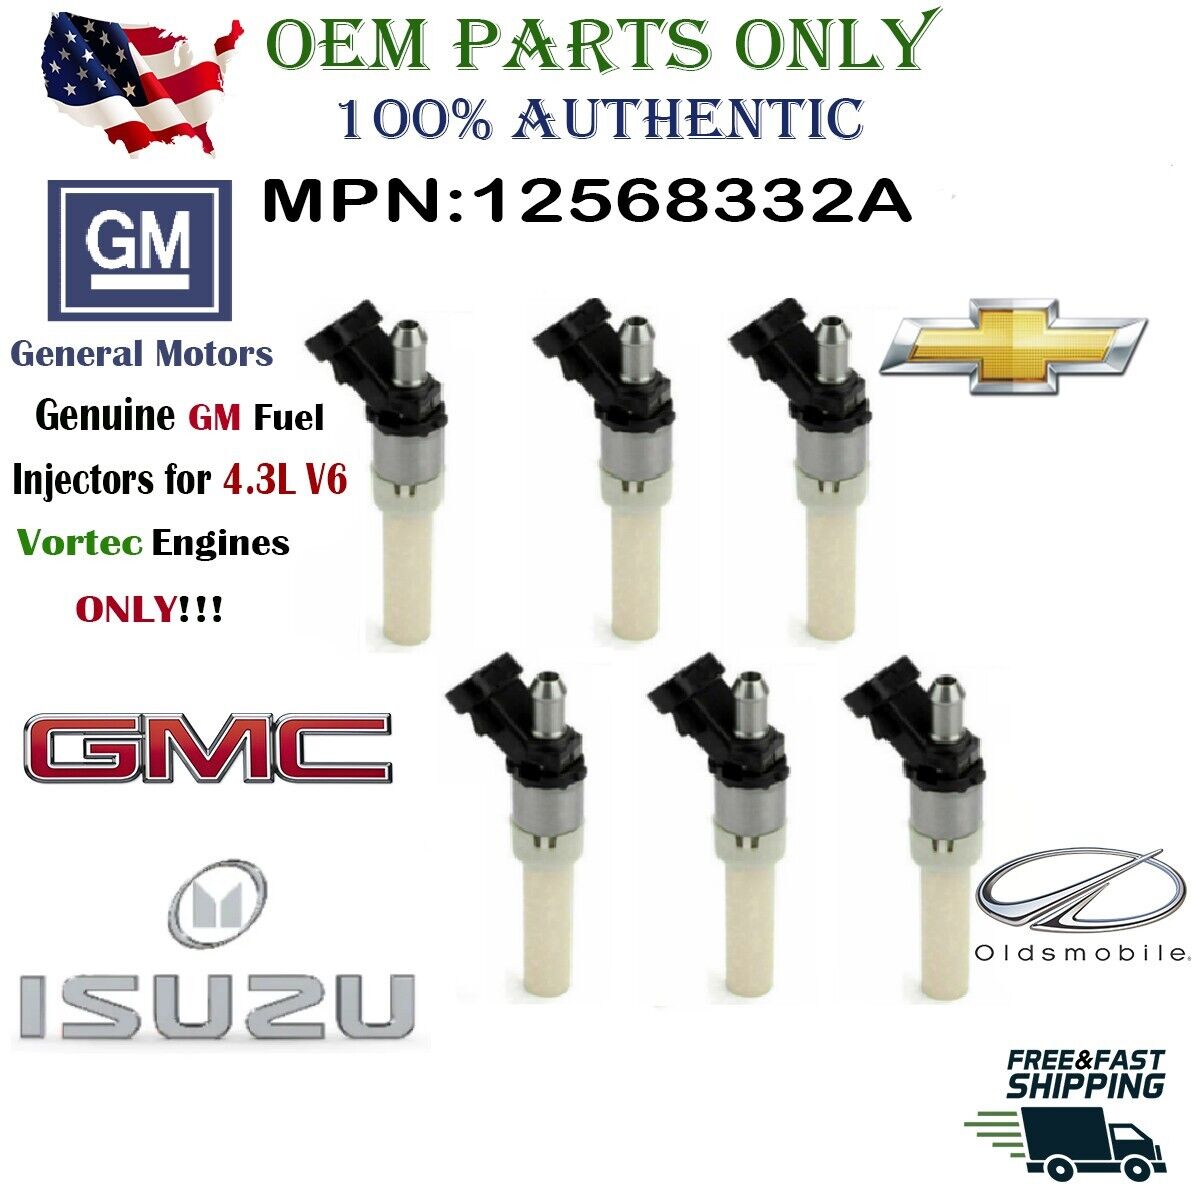 OEM GM Spider x6 Fuel Injectors for 1996-2014 GMC, Chevy, Isuzu 4.3L V6 Vortec